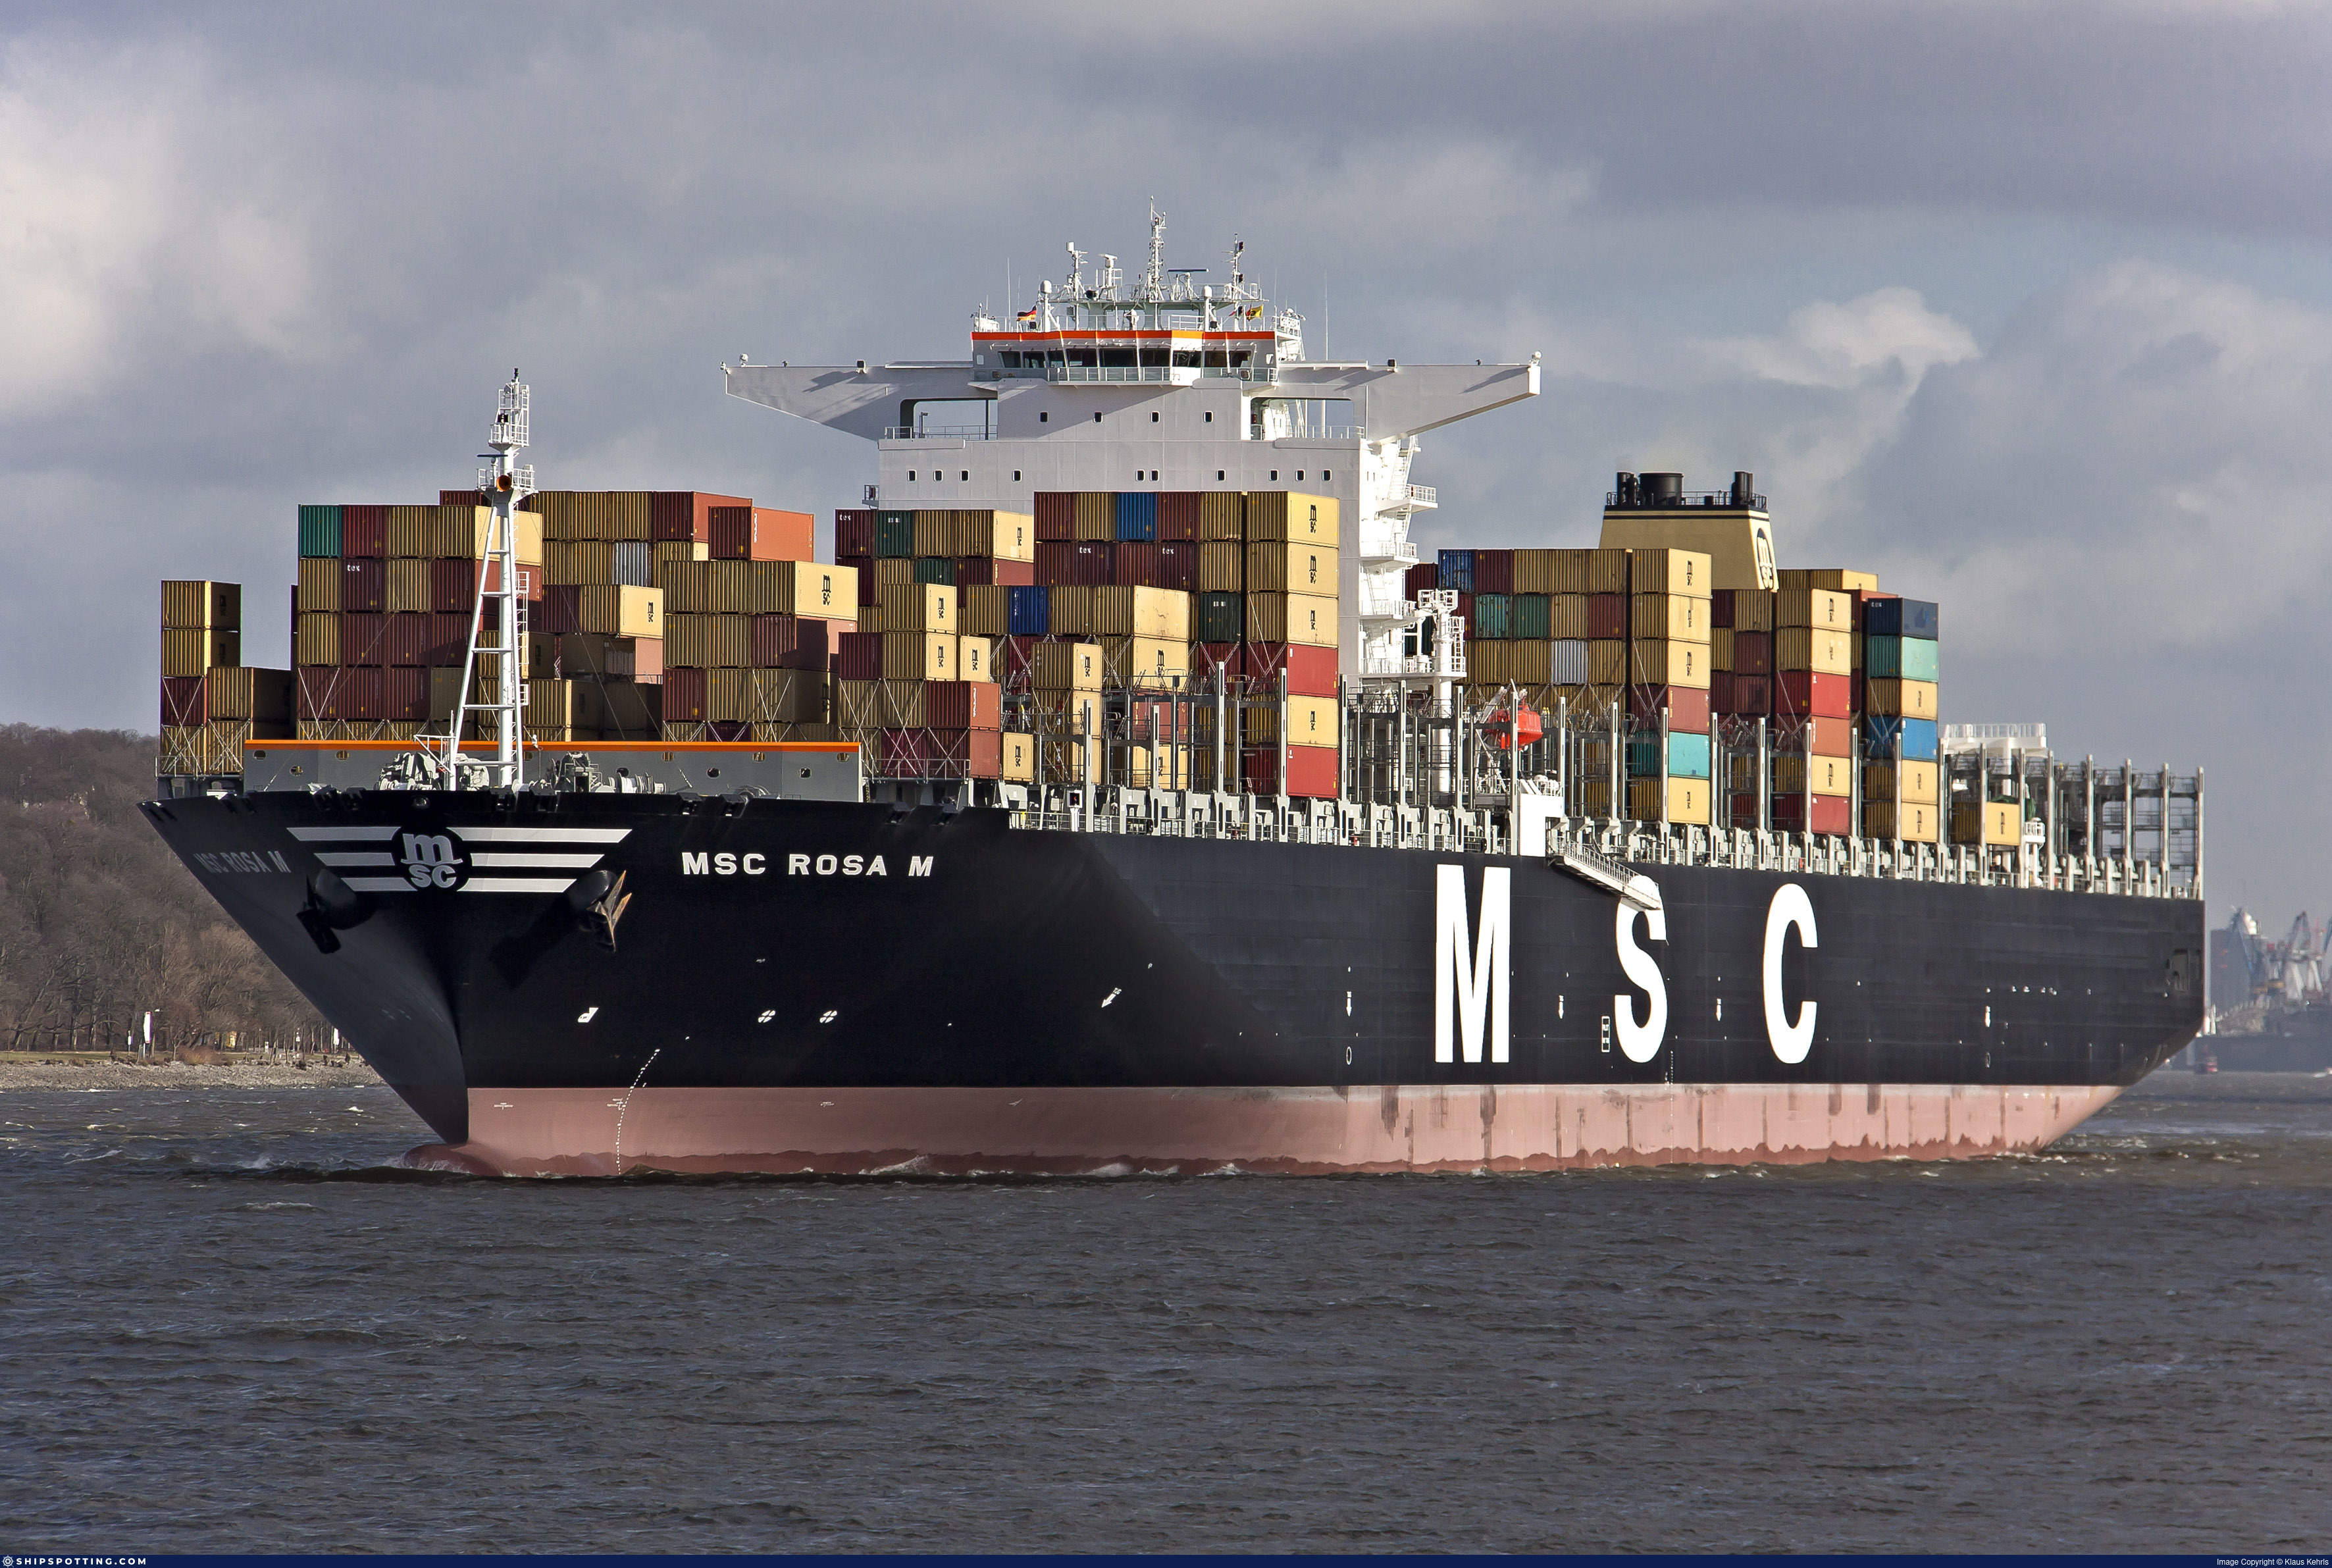 MSC ROSA M - IMO 9461398 - ShipSpotting.com - Ship Photos, Information,  Videos and Ship Tracker